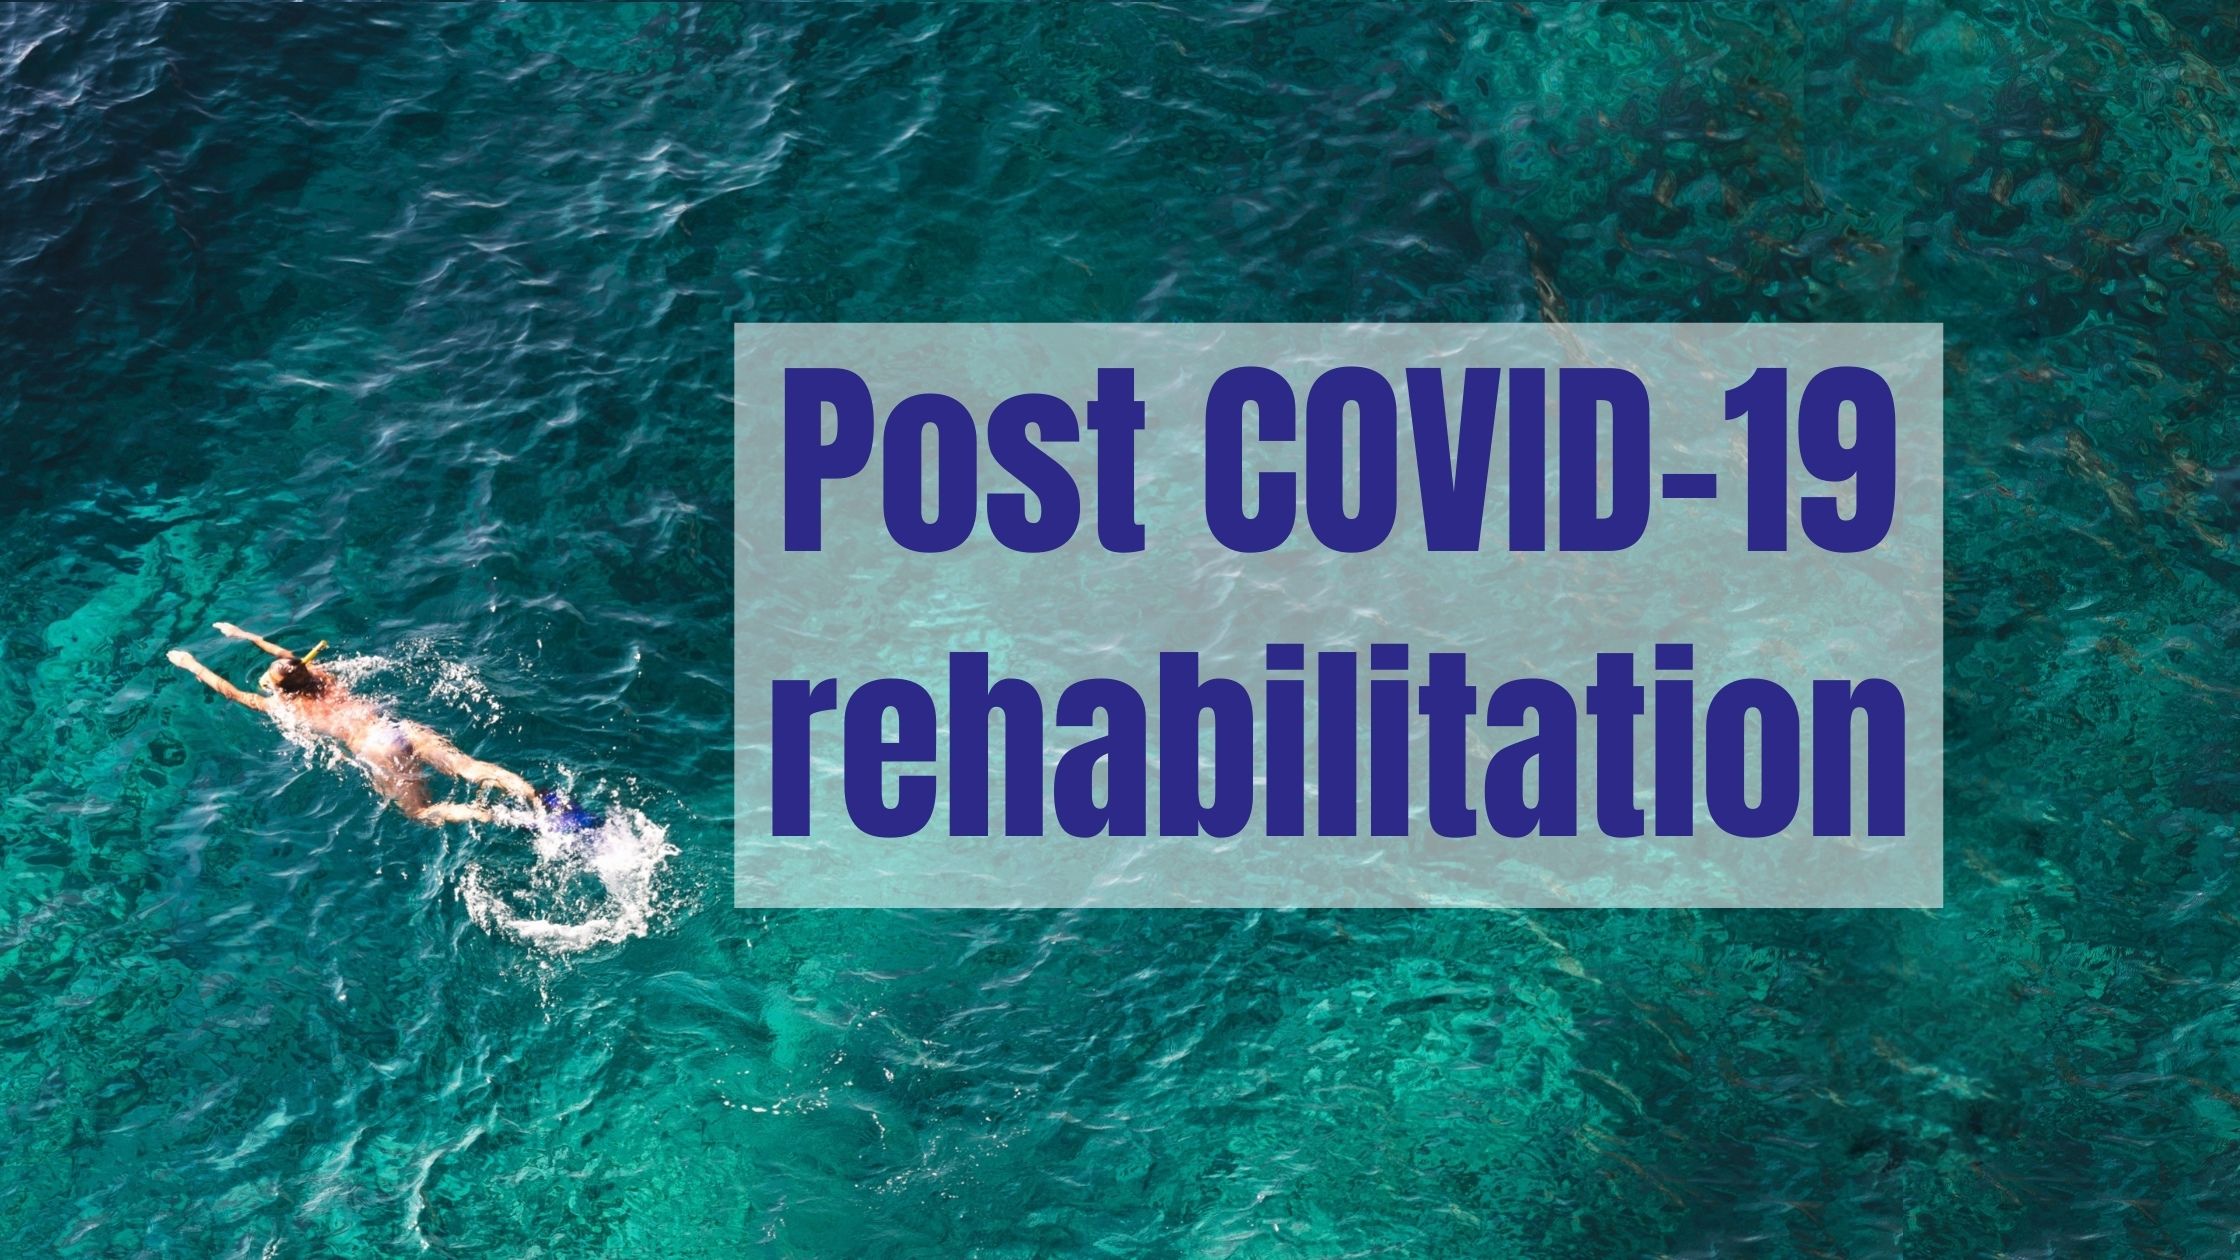 Post covid-19 rehabilitation